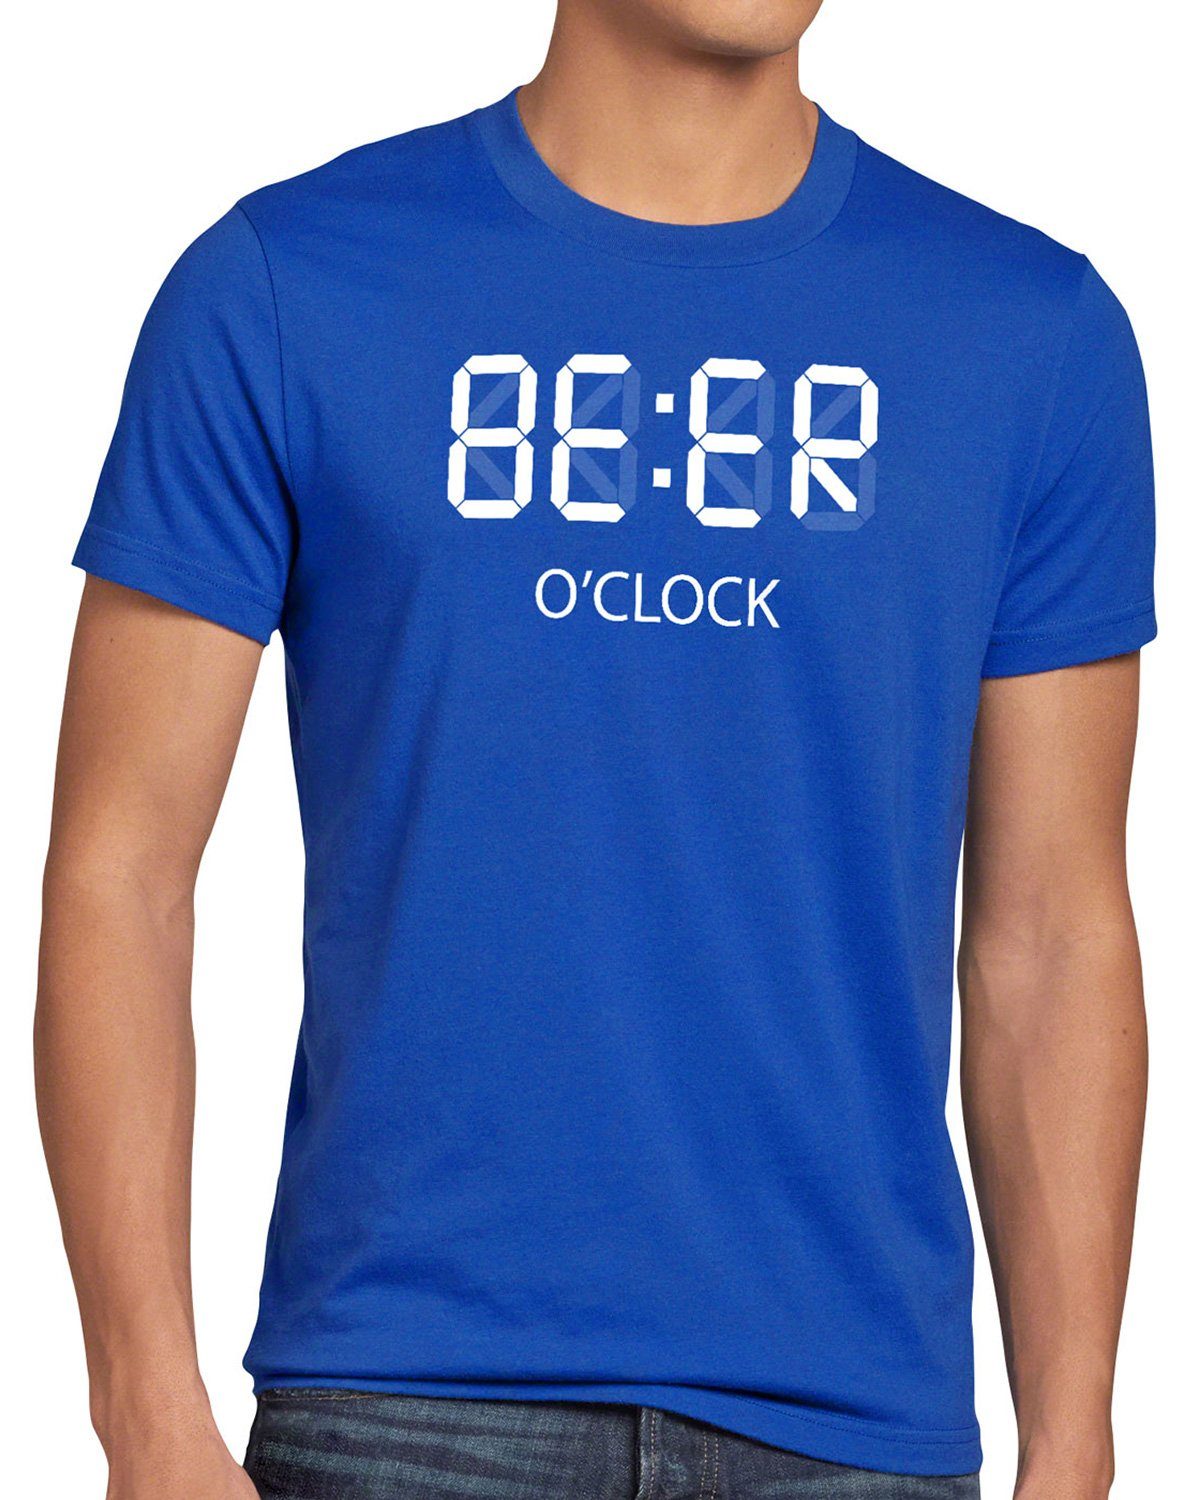 style3 Print-Shirt jga T-Shirt o'clock mallorca BEER papa Herren saufen blau